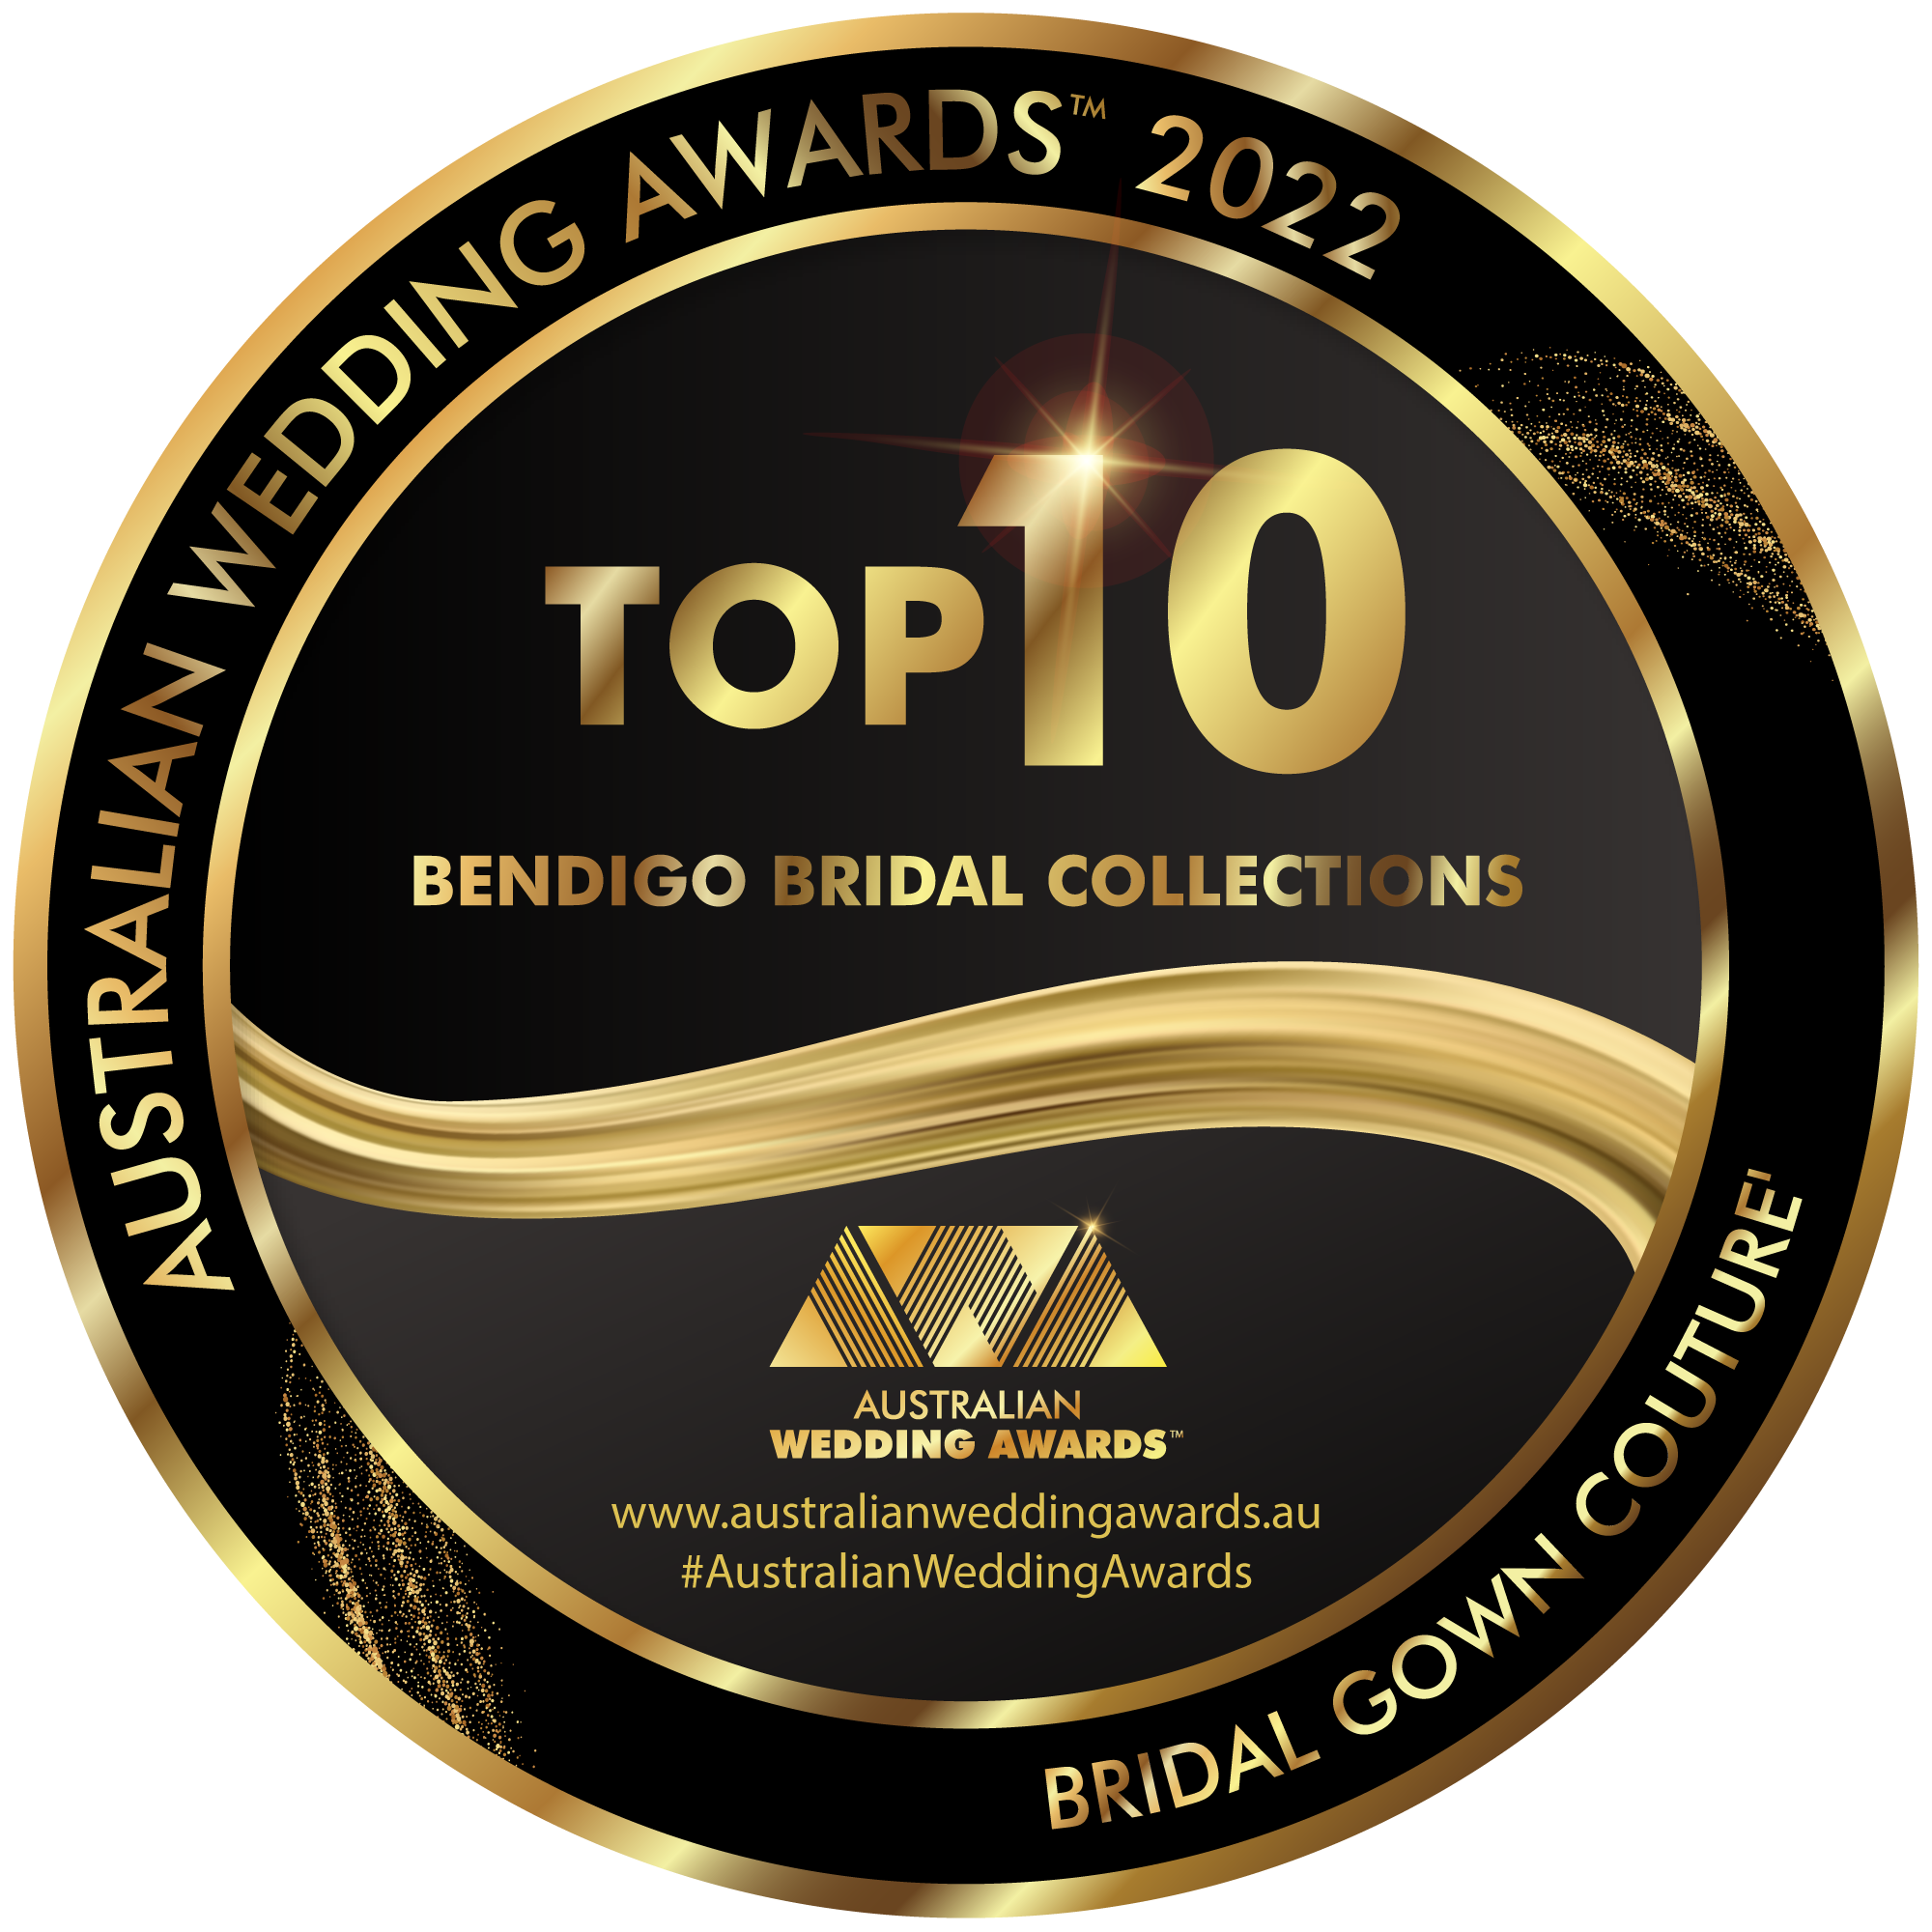 Bendigo-Bridal-Collections-AWA-Roundel2022-TOP10.png